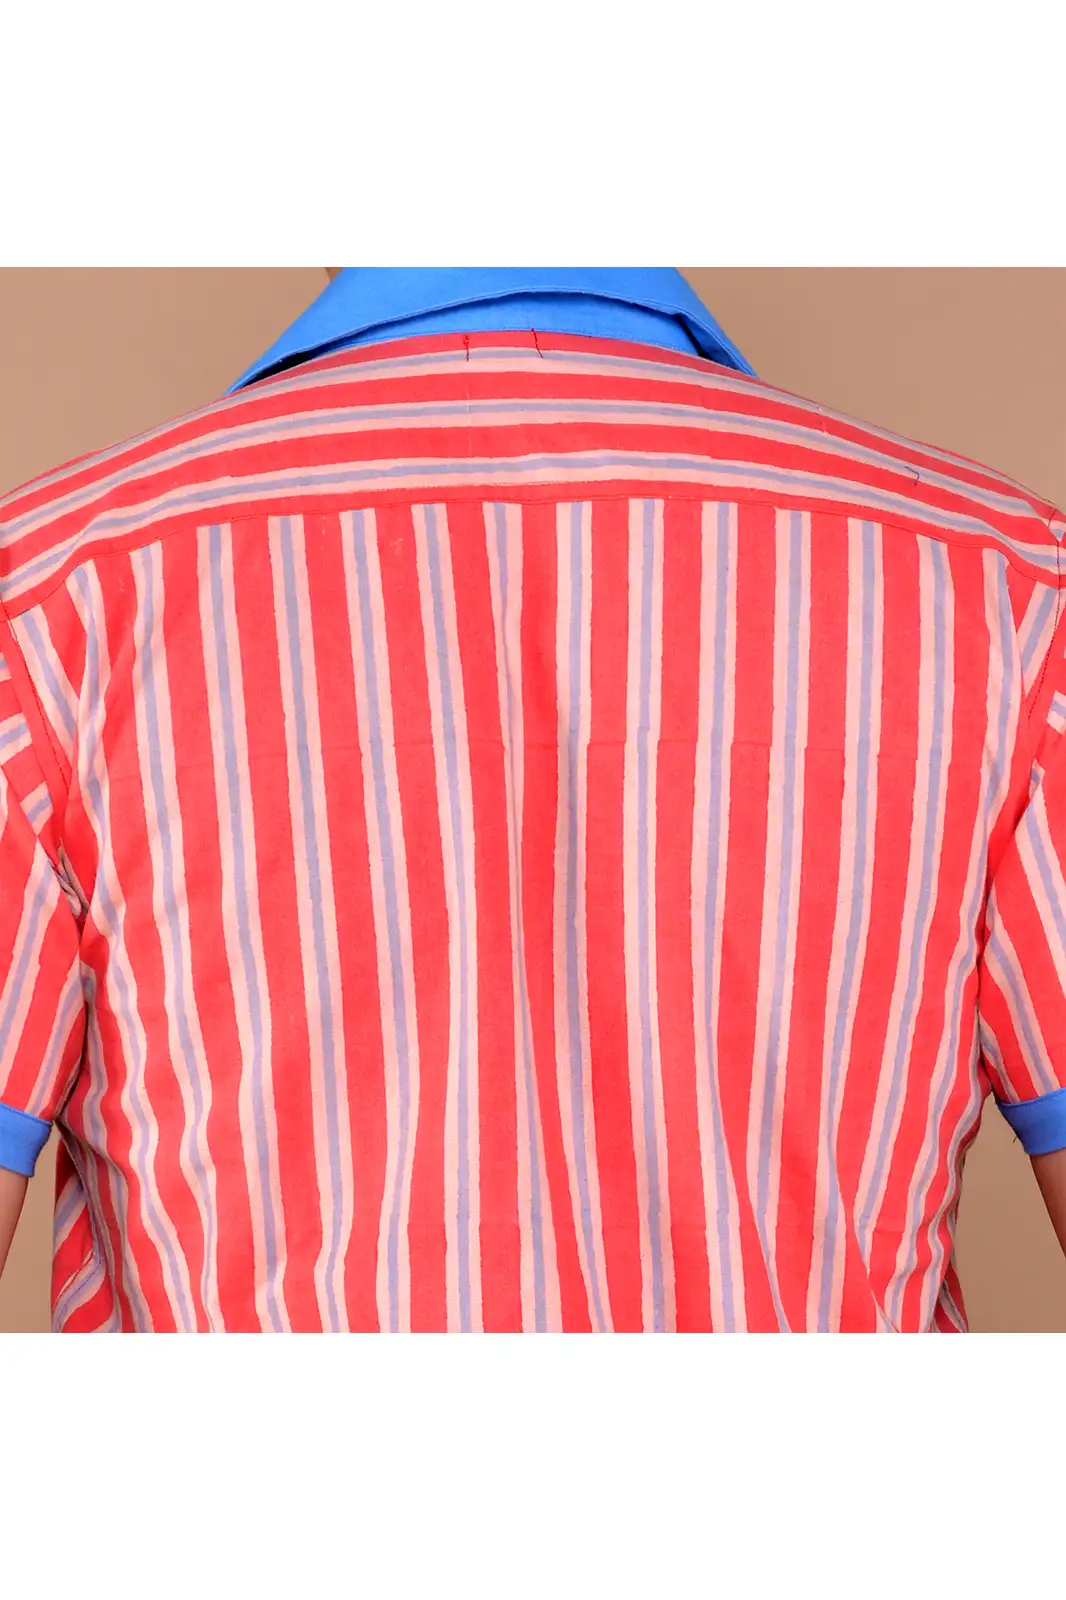 mens hand block strip print shirt, clothing for men, print shirt for men, print shirt design, shirt for man, printed shirt man, striped shirt, striped shirt vertical